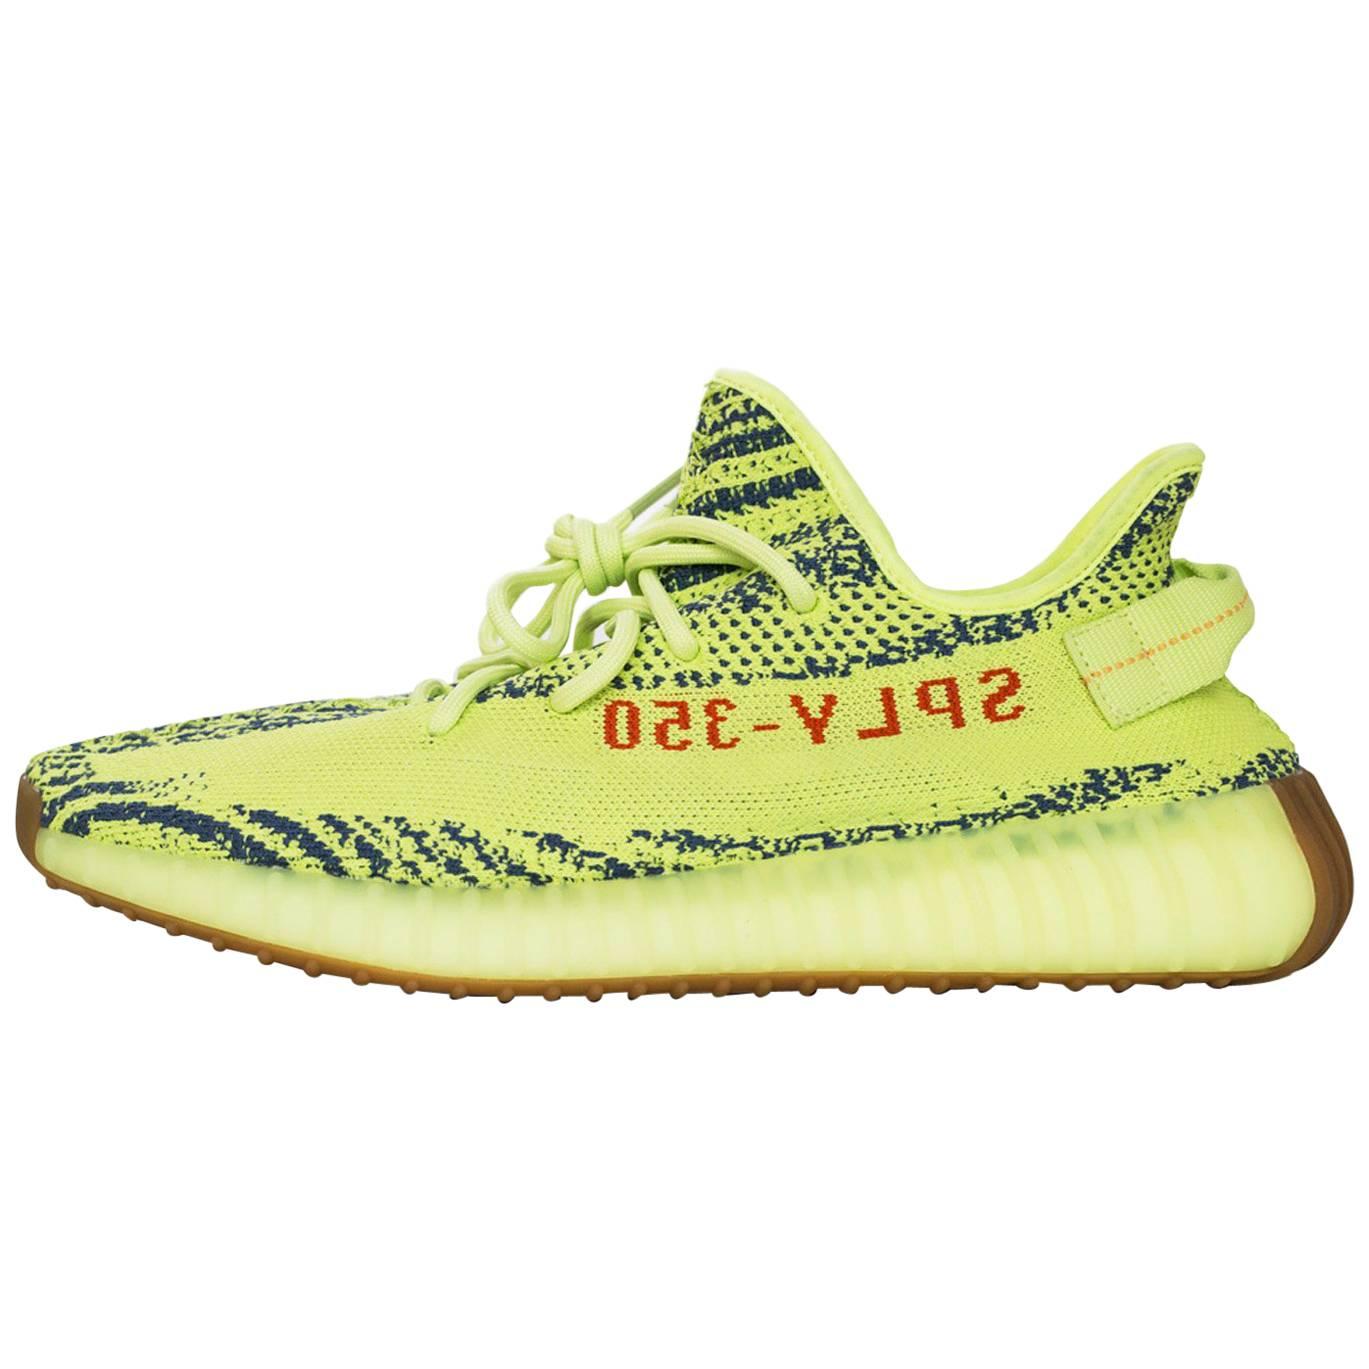 Adidas x Kanye West Yeezy Boost 350 V2 Semi Frozen Yellow 2.0 Sneakers Sz 10 NIB